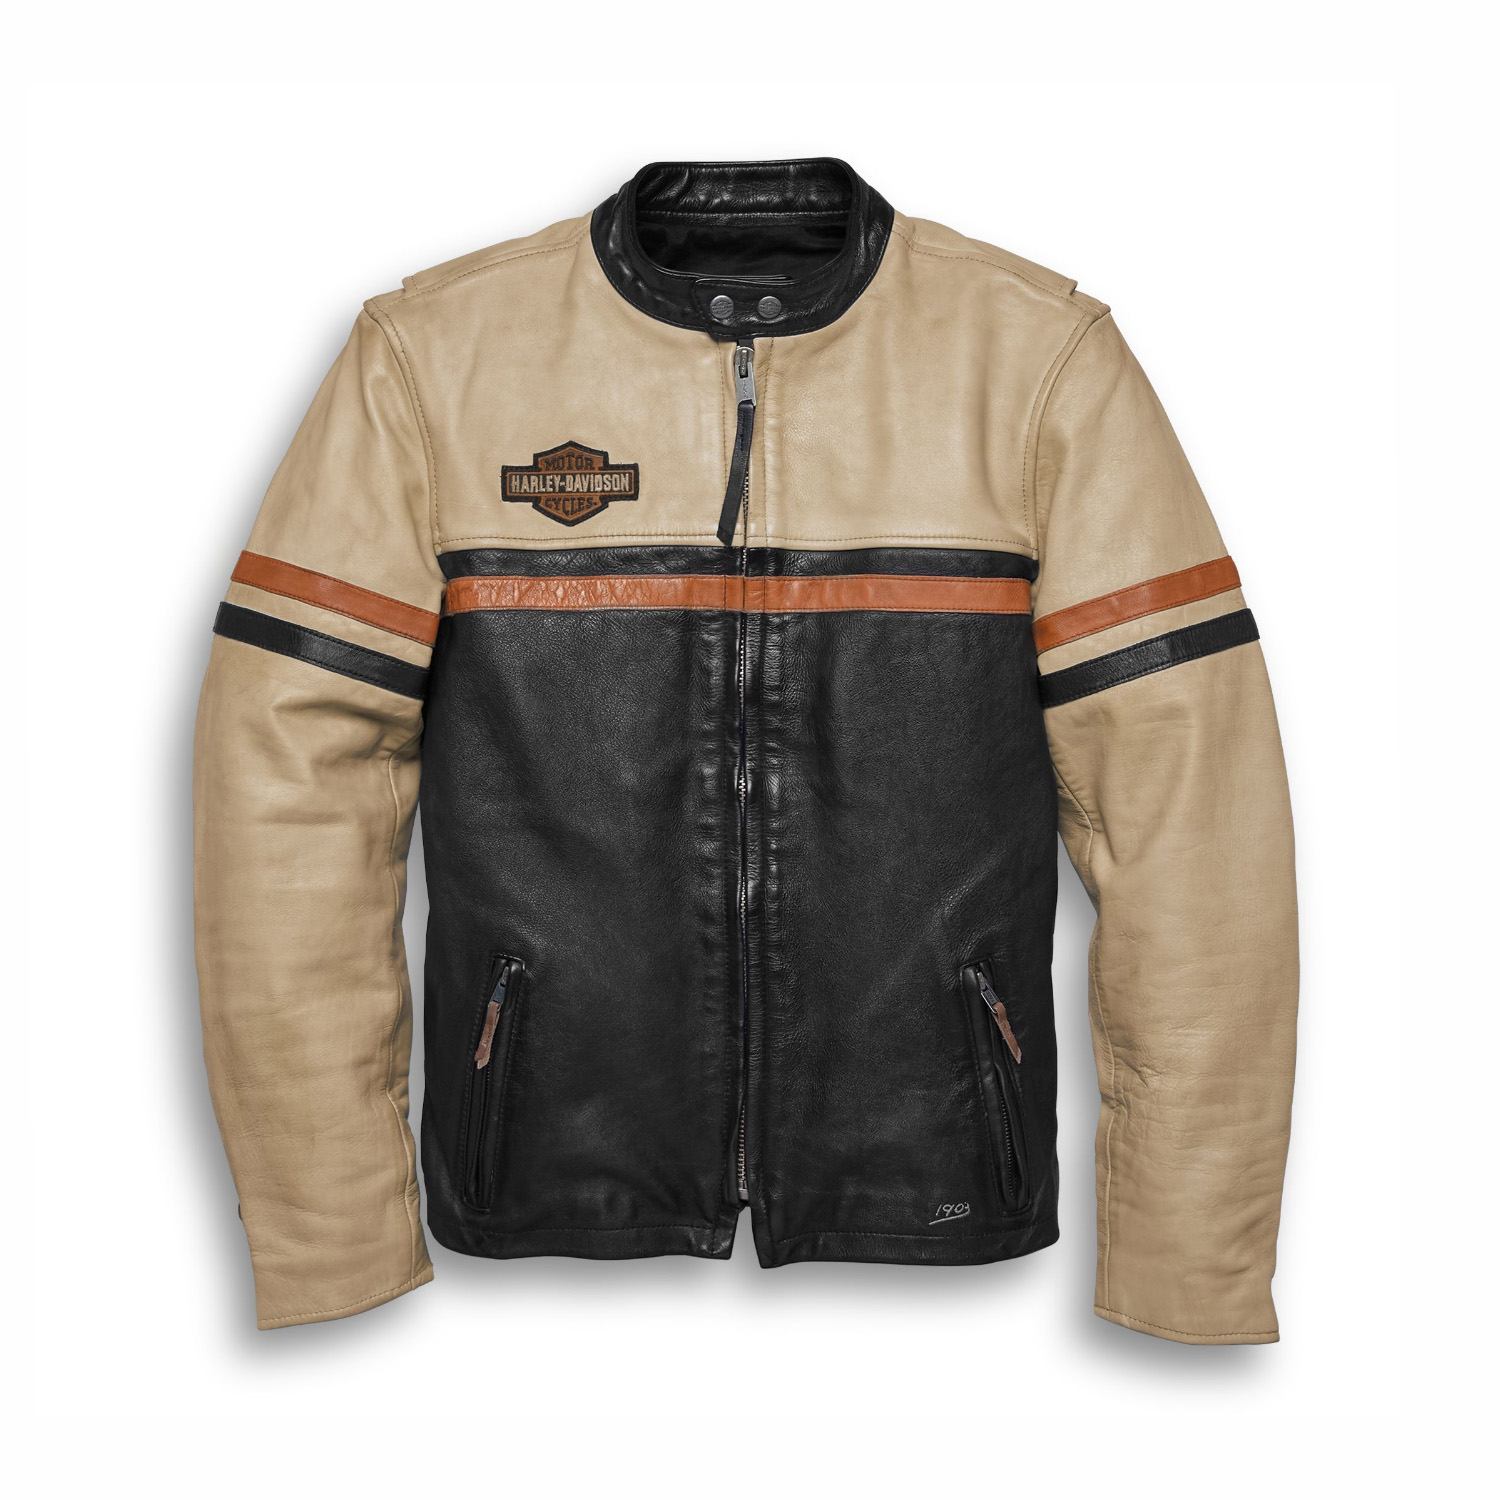 Men's #1 Harley Davidson Racing Leather Jacket - Blazon Leather